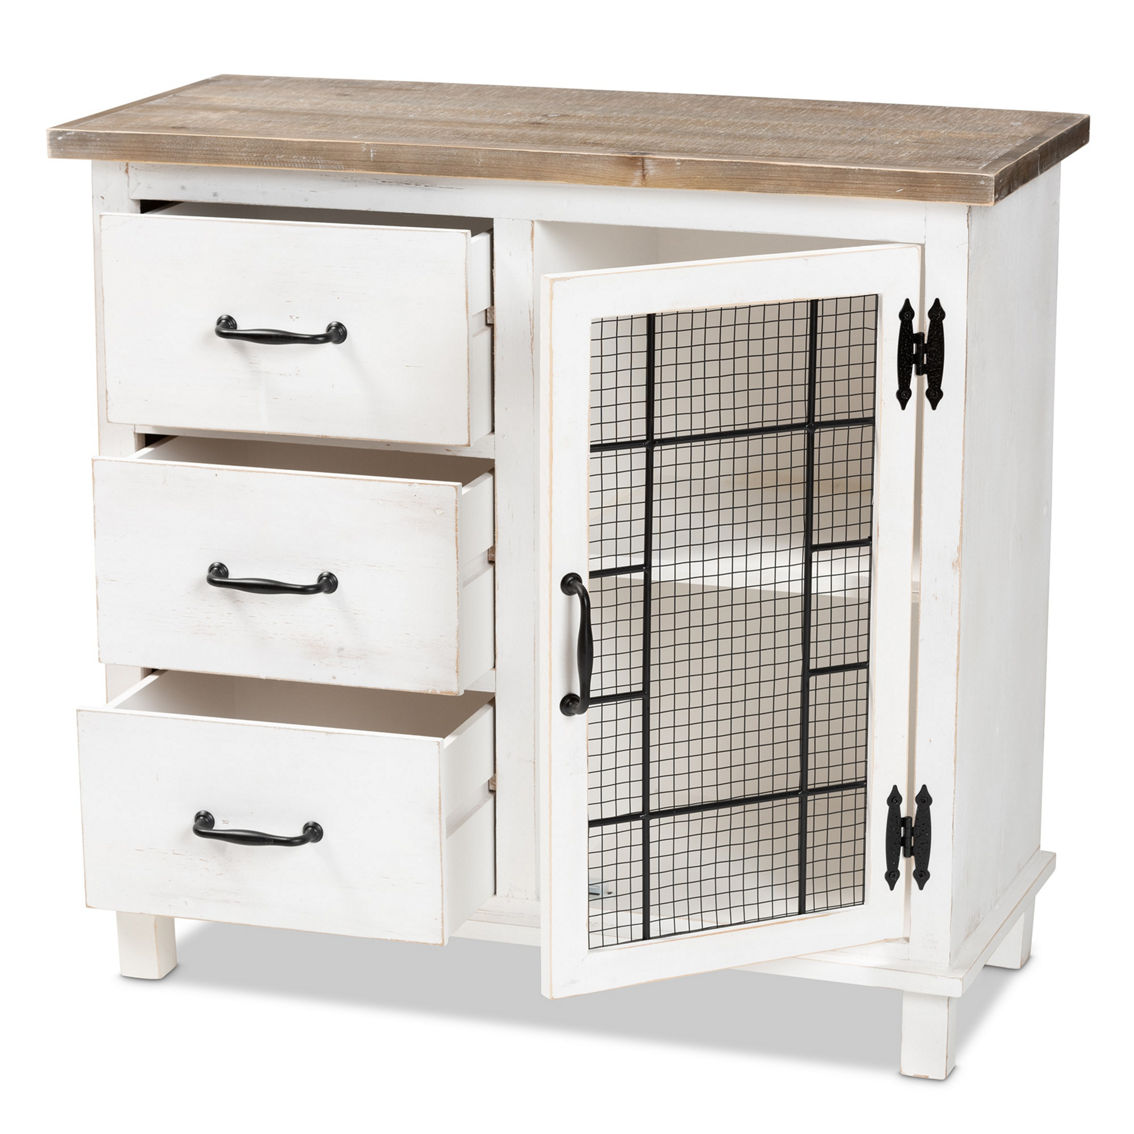 Baxton Studio Faron Distressed White and Oak Brown 3-Drawer Storage Cabinet - Image 2 of 5